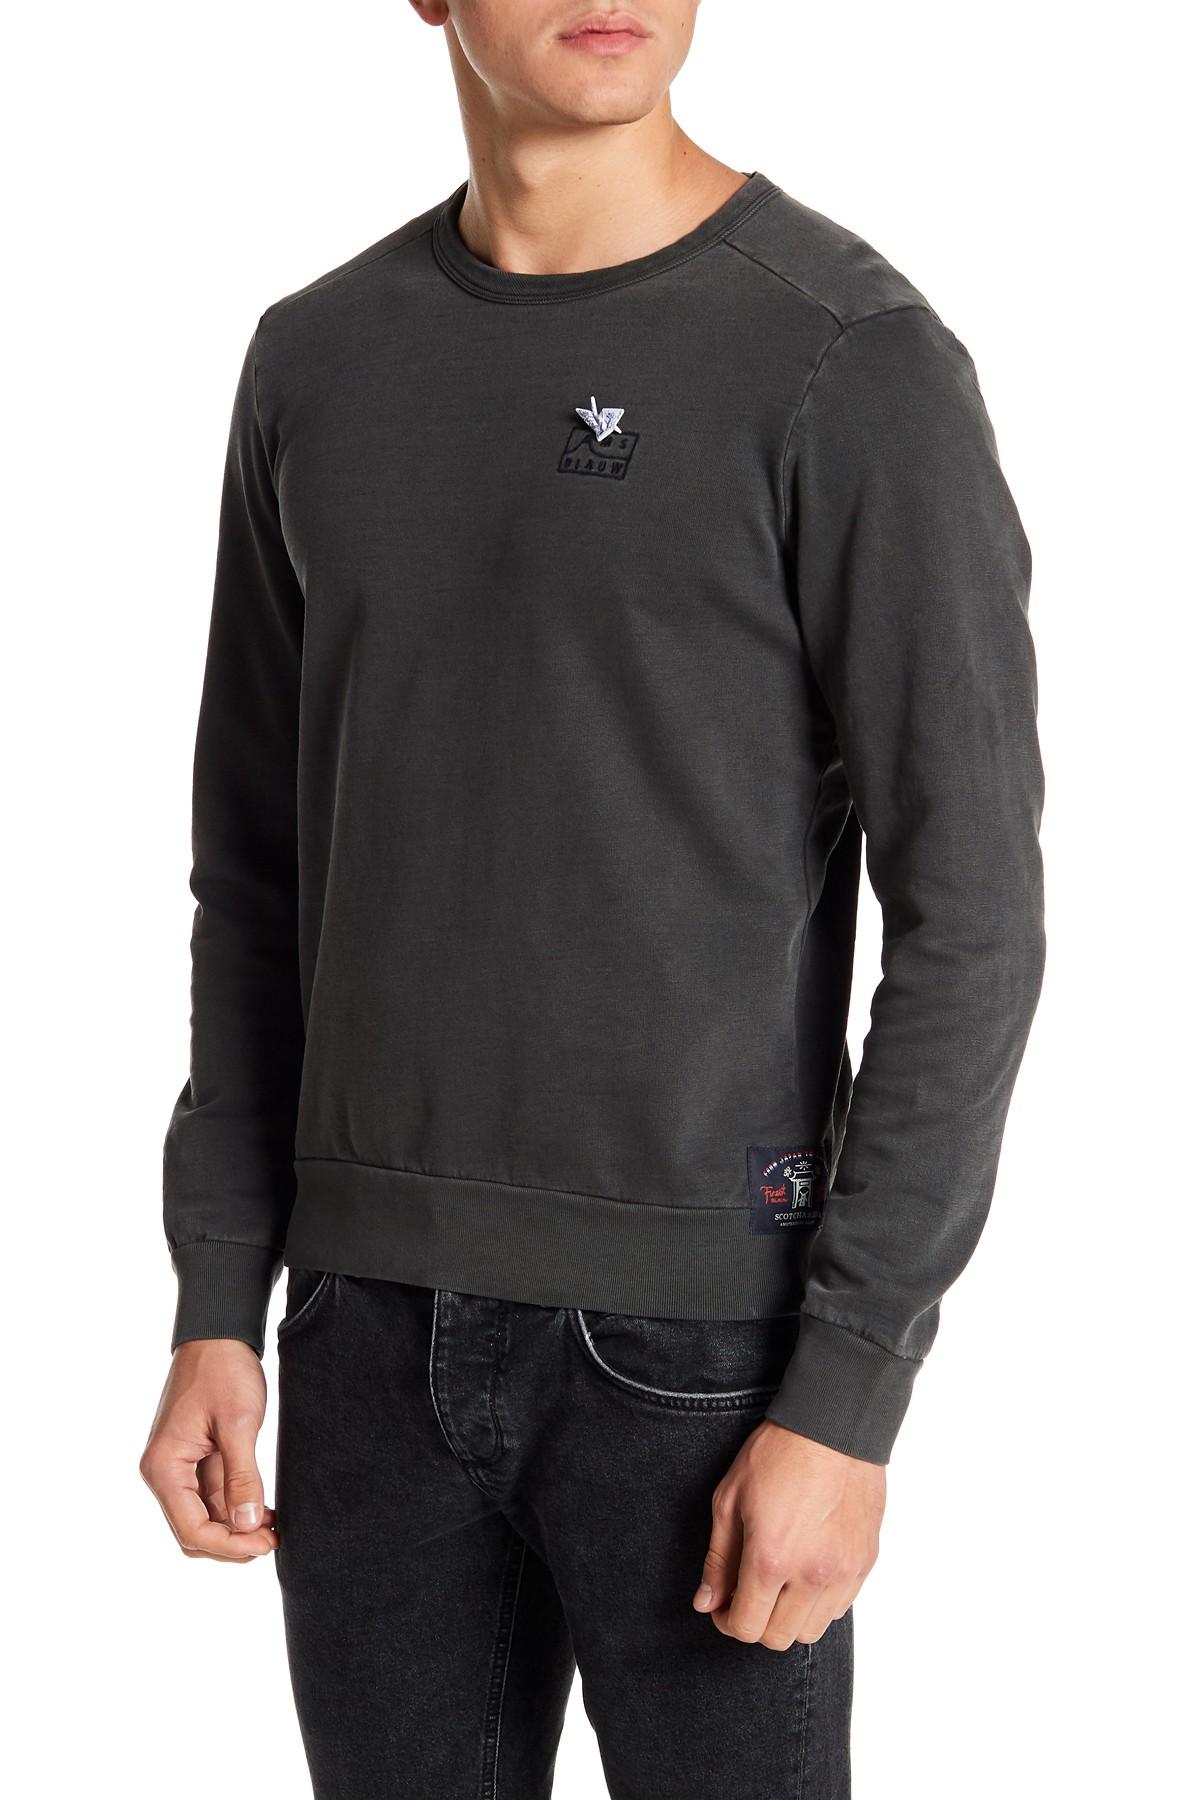 Scotch & Soda Garment Dyed Sweatshirt in Gray for Men - Lyst